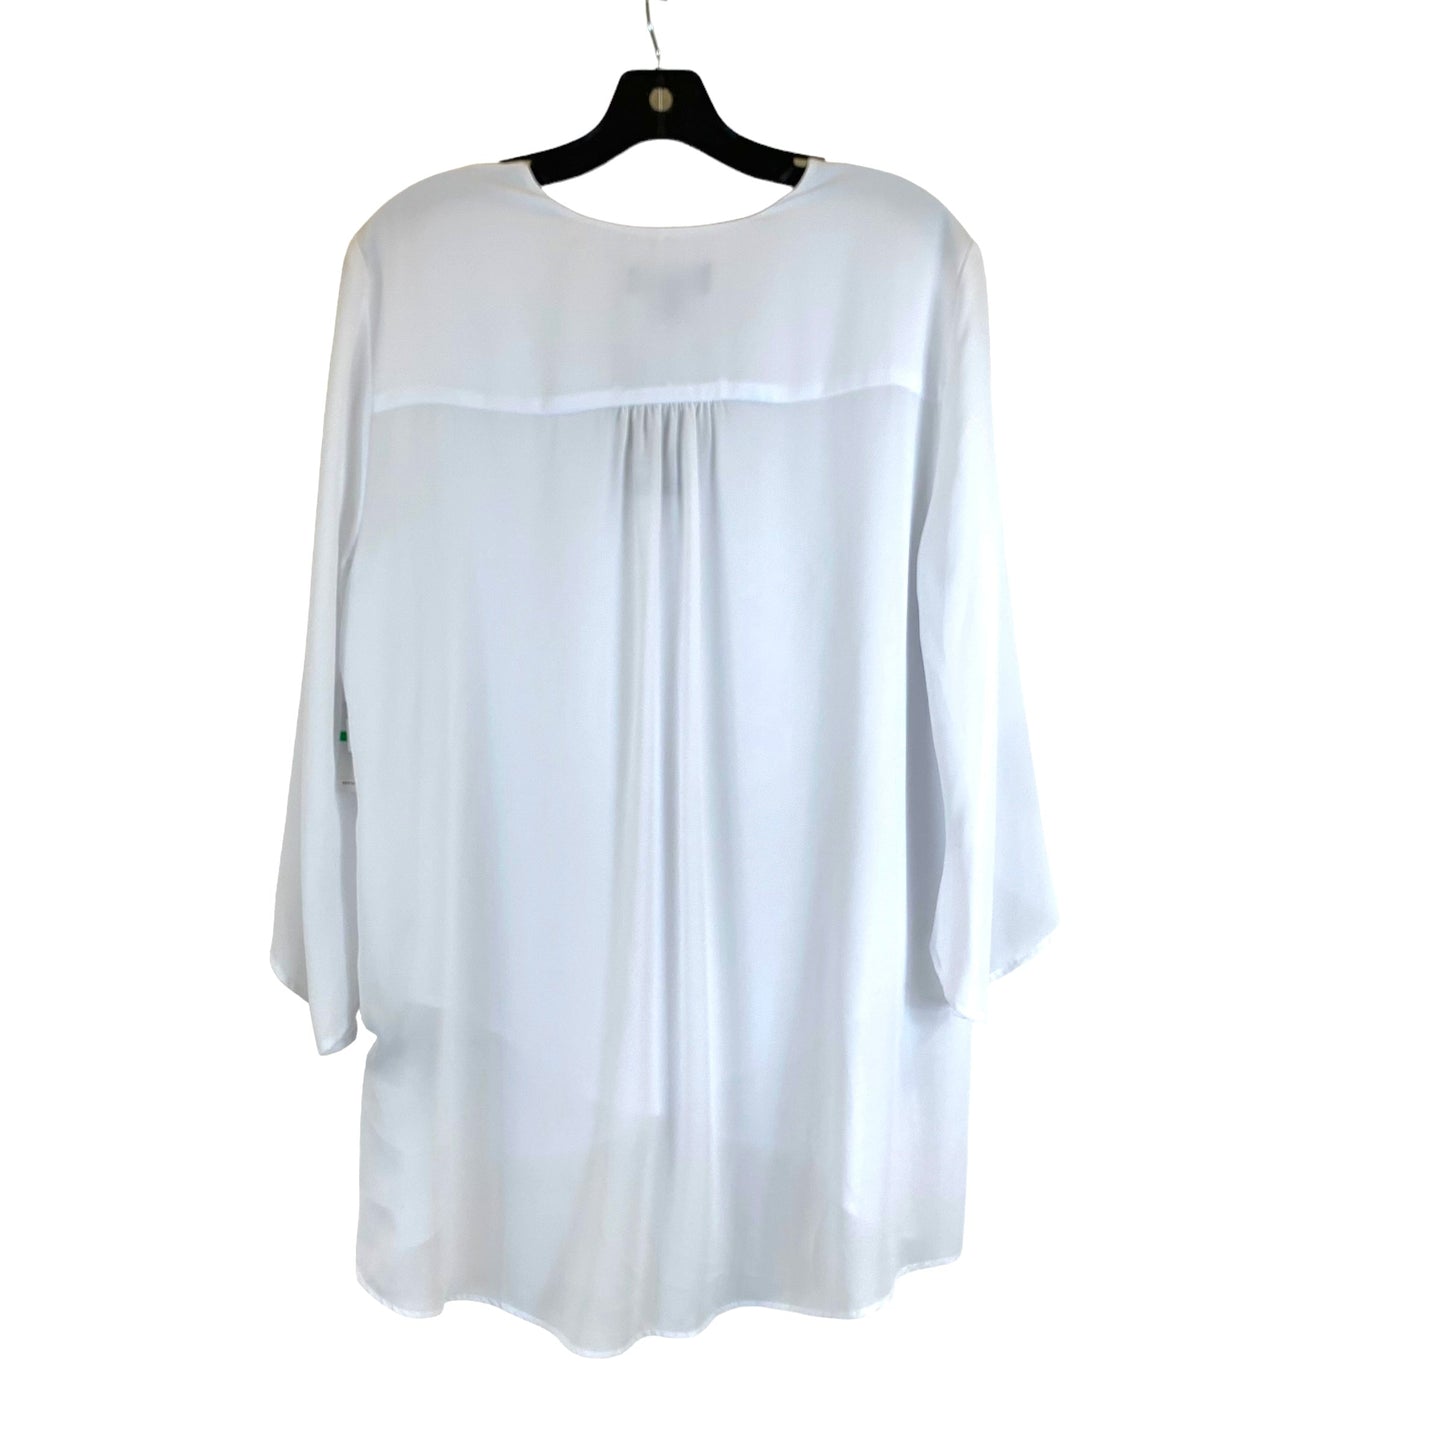 White Blouse Long Sleeve Karen Kane, Size L